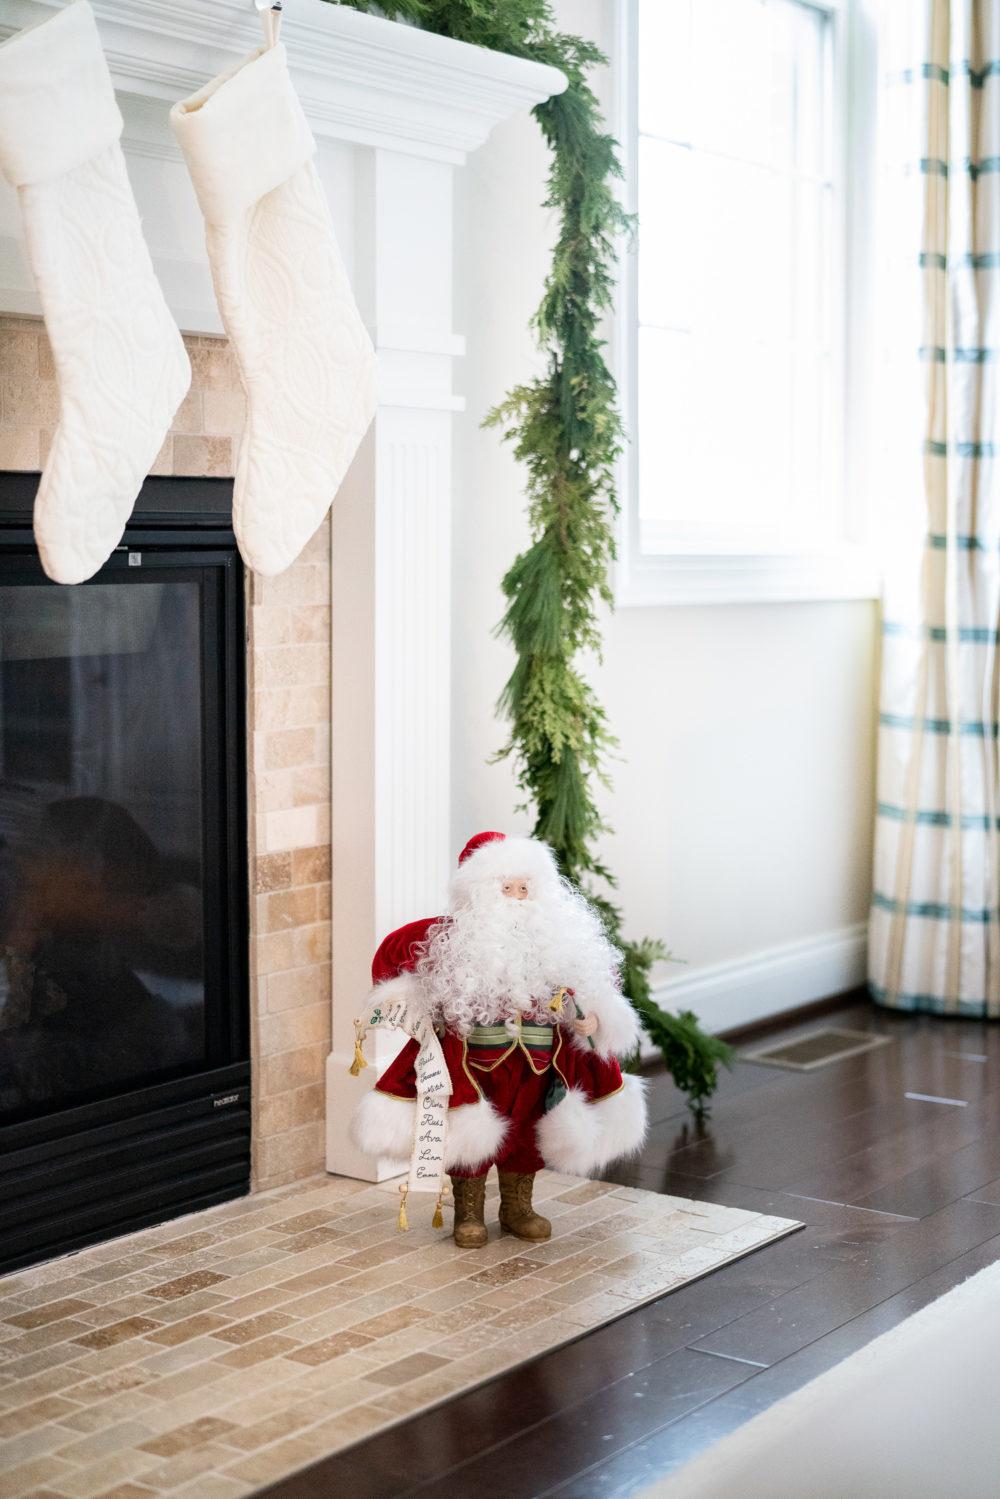  Petite Fashion Blog | Our Home for the Holidays | Christmas Decor | Flocked Christmas Tree | Christmas Pillows